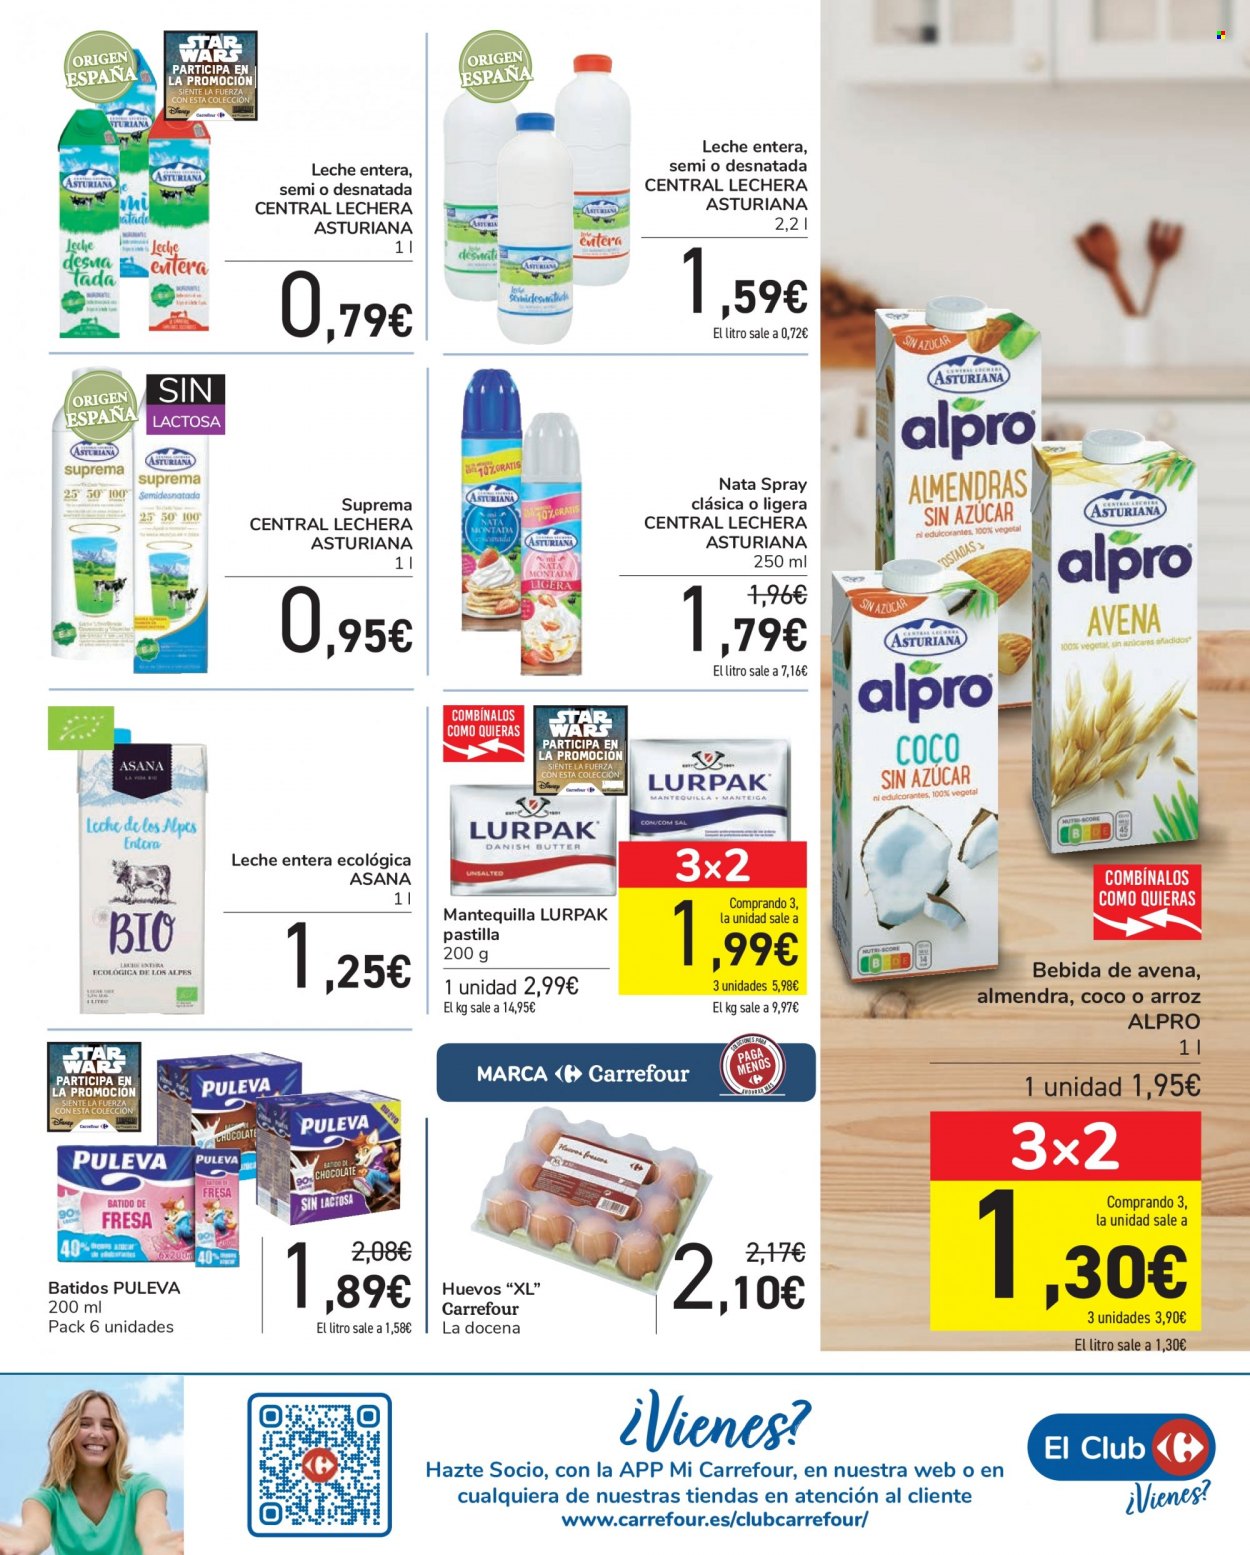 thumbnail - Folleto actual Carrefour - 24/11/21 - 02/12/21 - Ventas - Alpro, leche, leche de avena, leche entera, Puleva, huevo, mantequilla, nata, sal, bebida. Página 31.